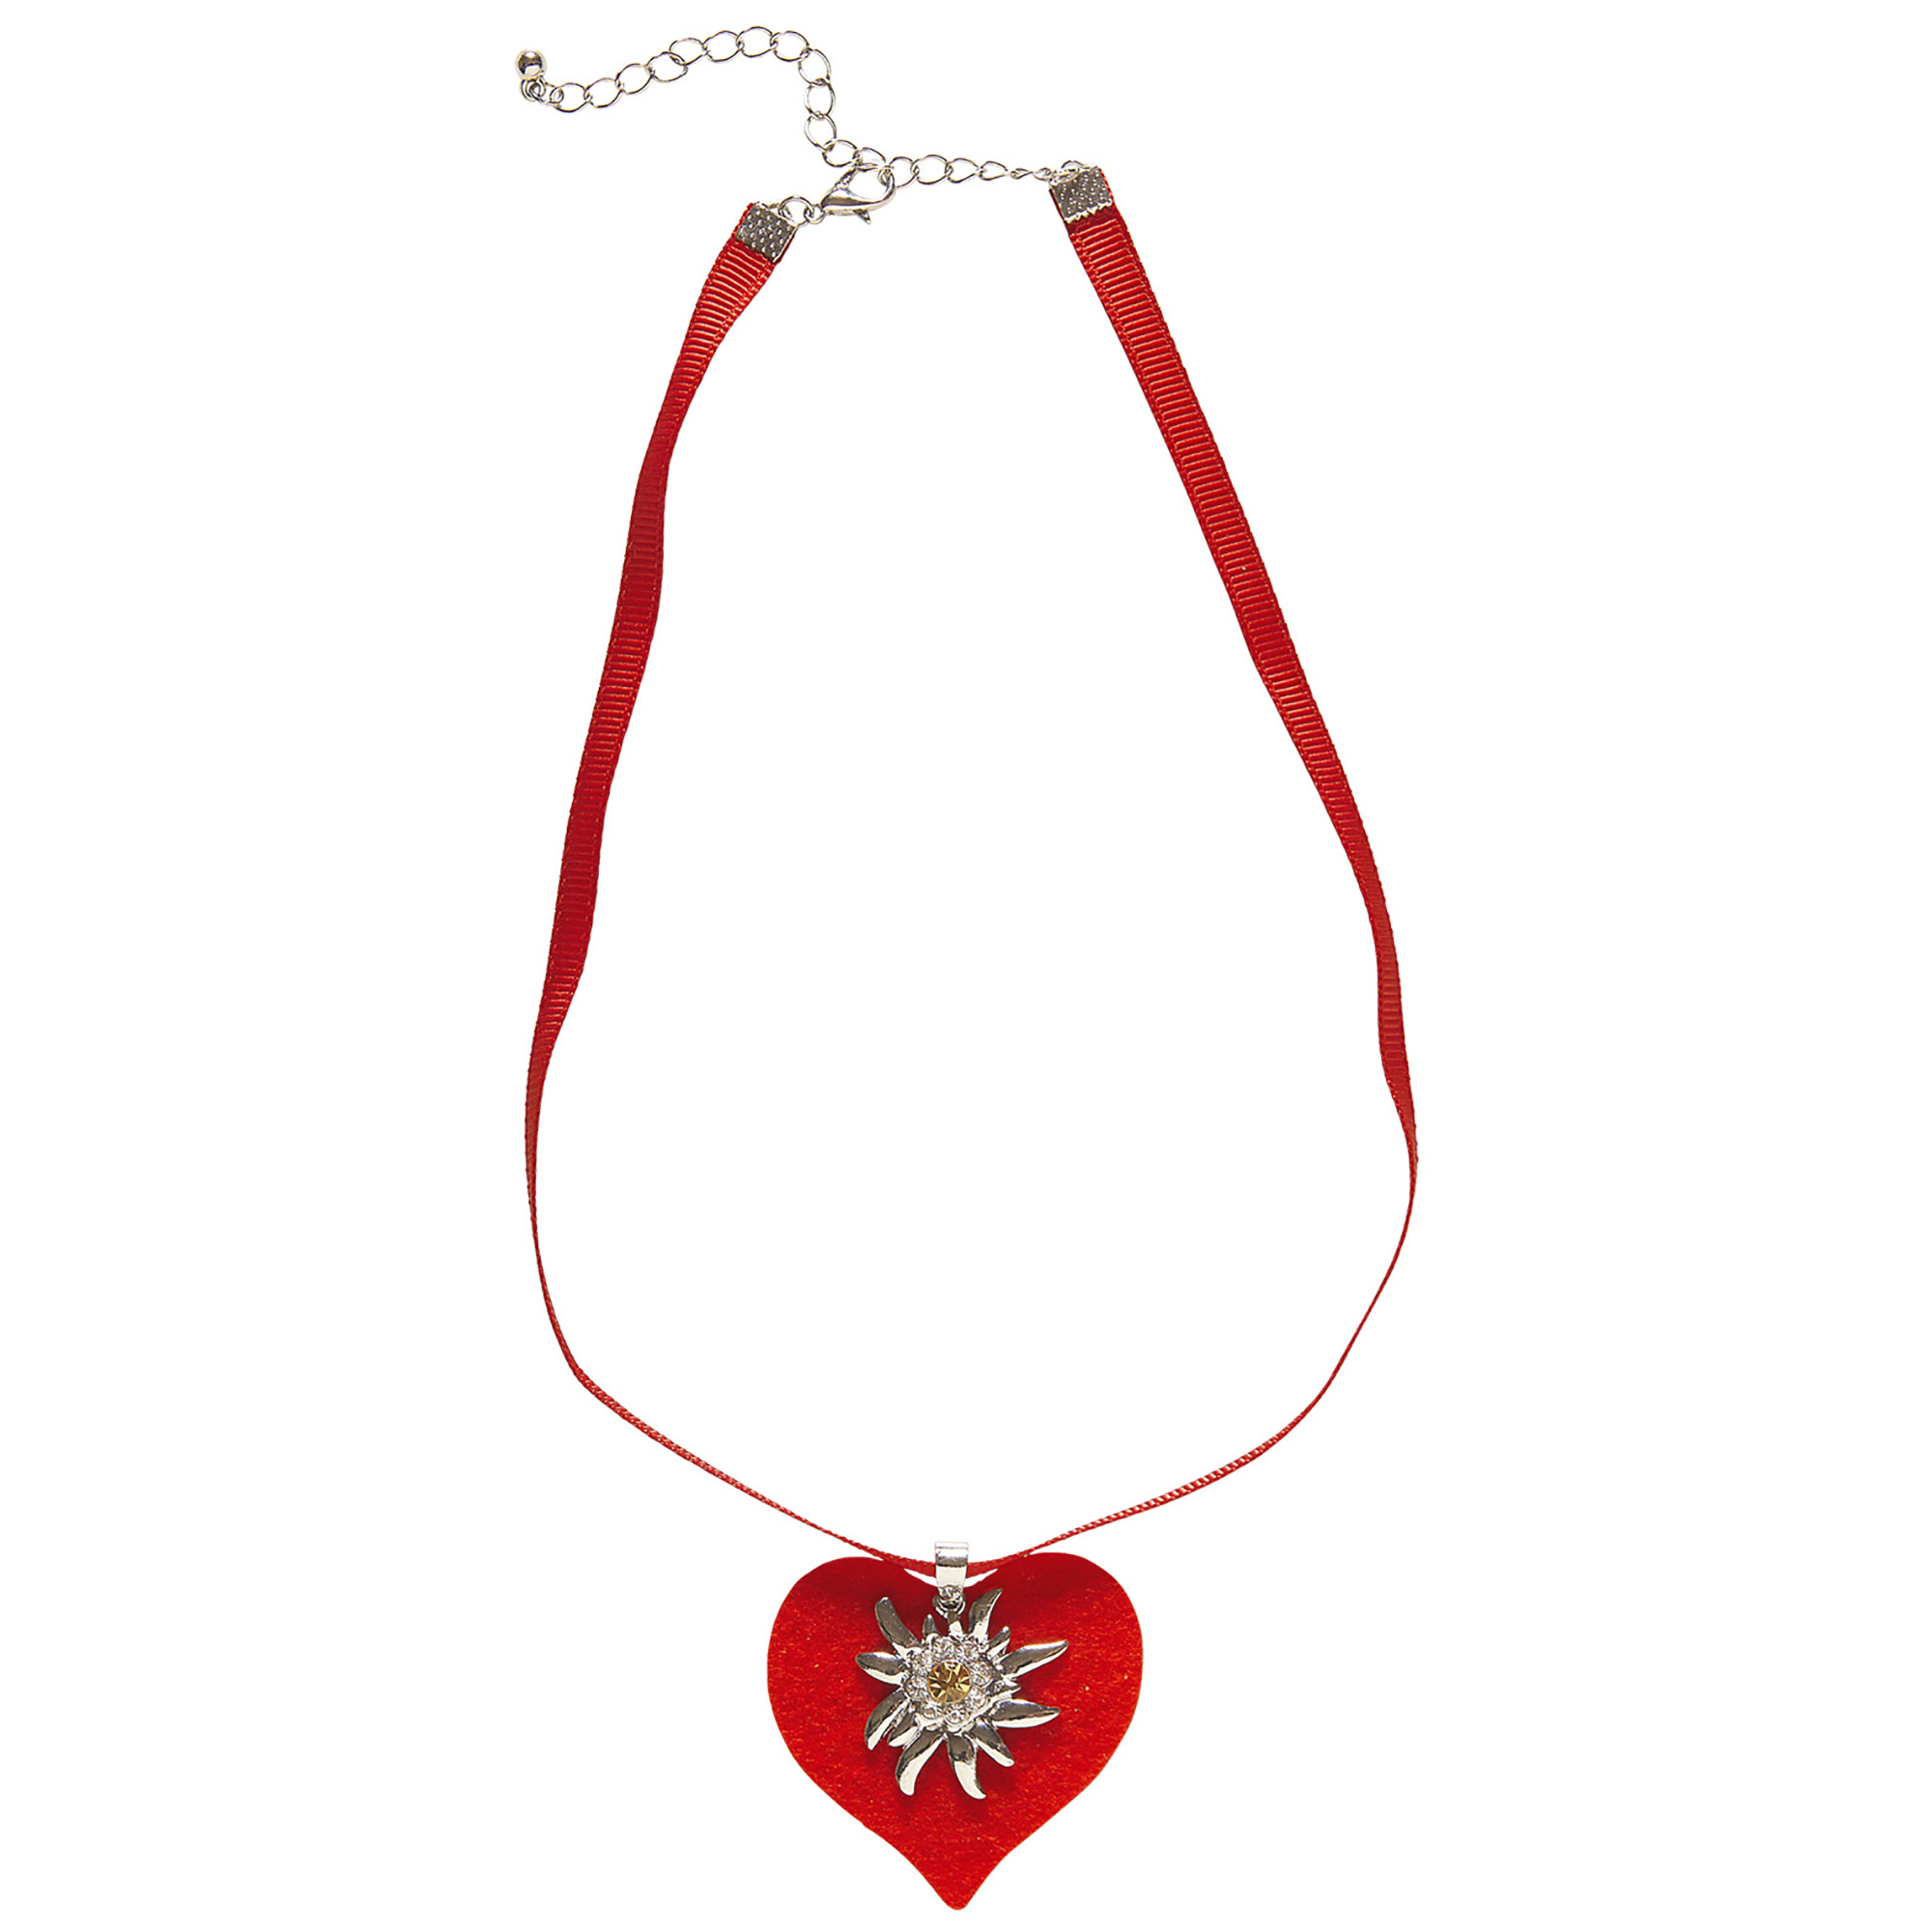 Zeer mooie Beierse halsketting met rood hartje